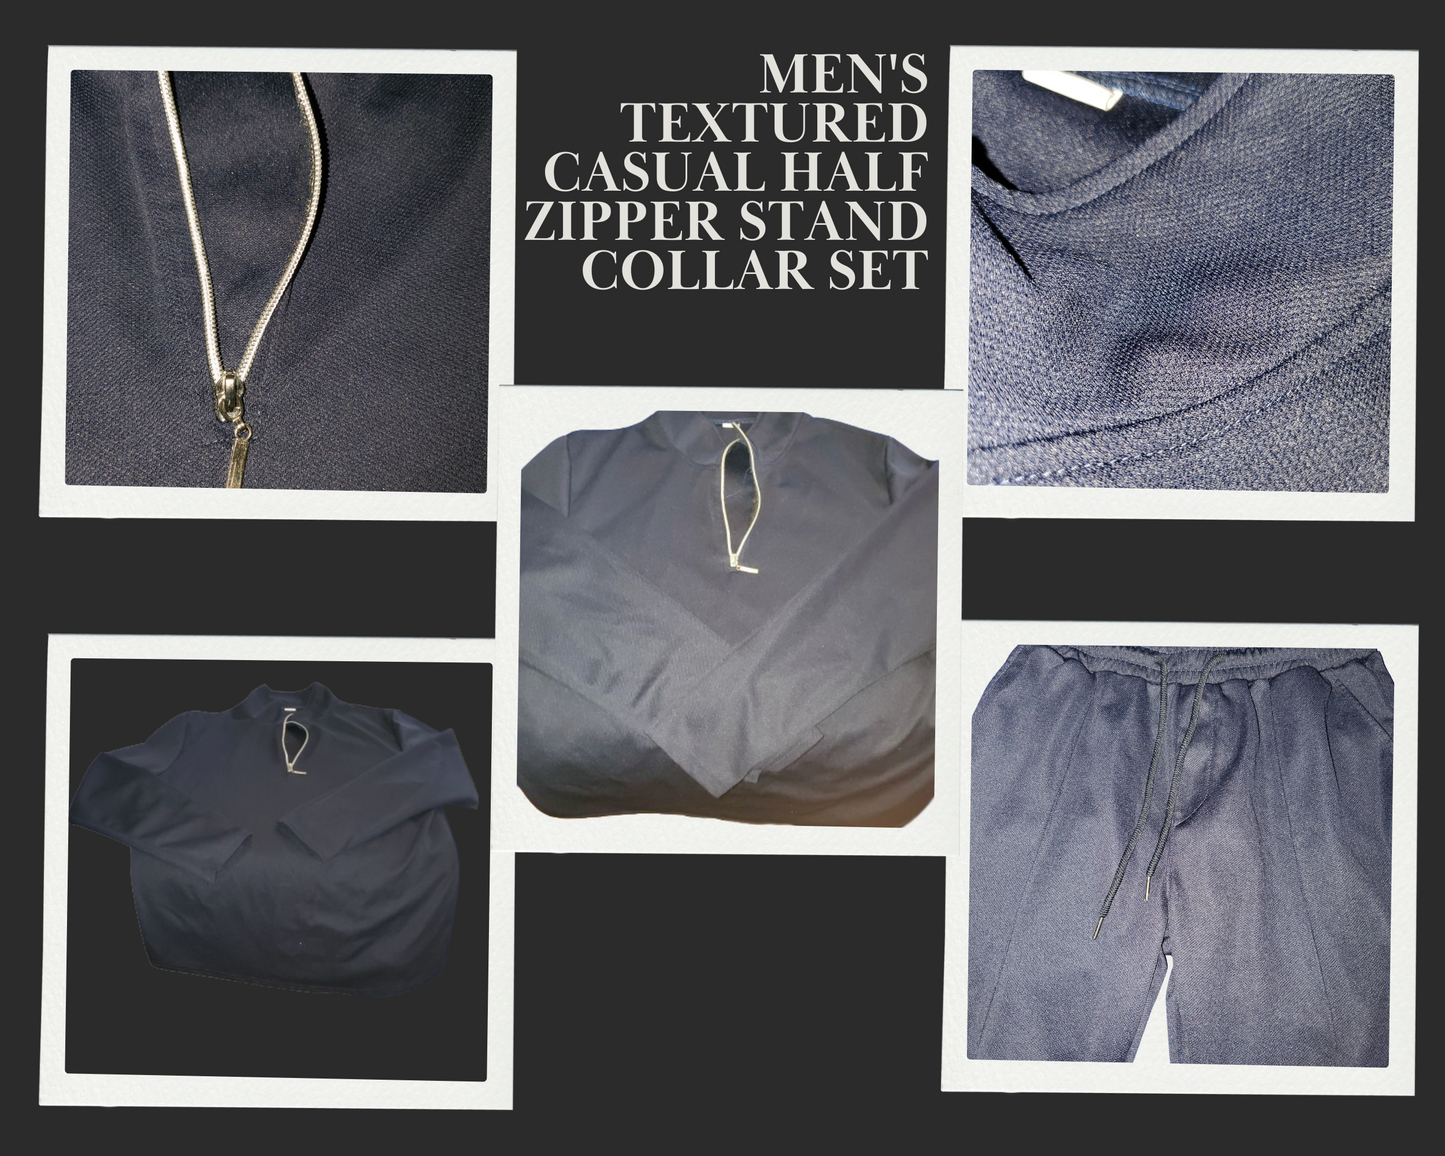 Men's Textured Casual Half Zipper Stand Collar Set - men's top & pants set at TFC&H Co.